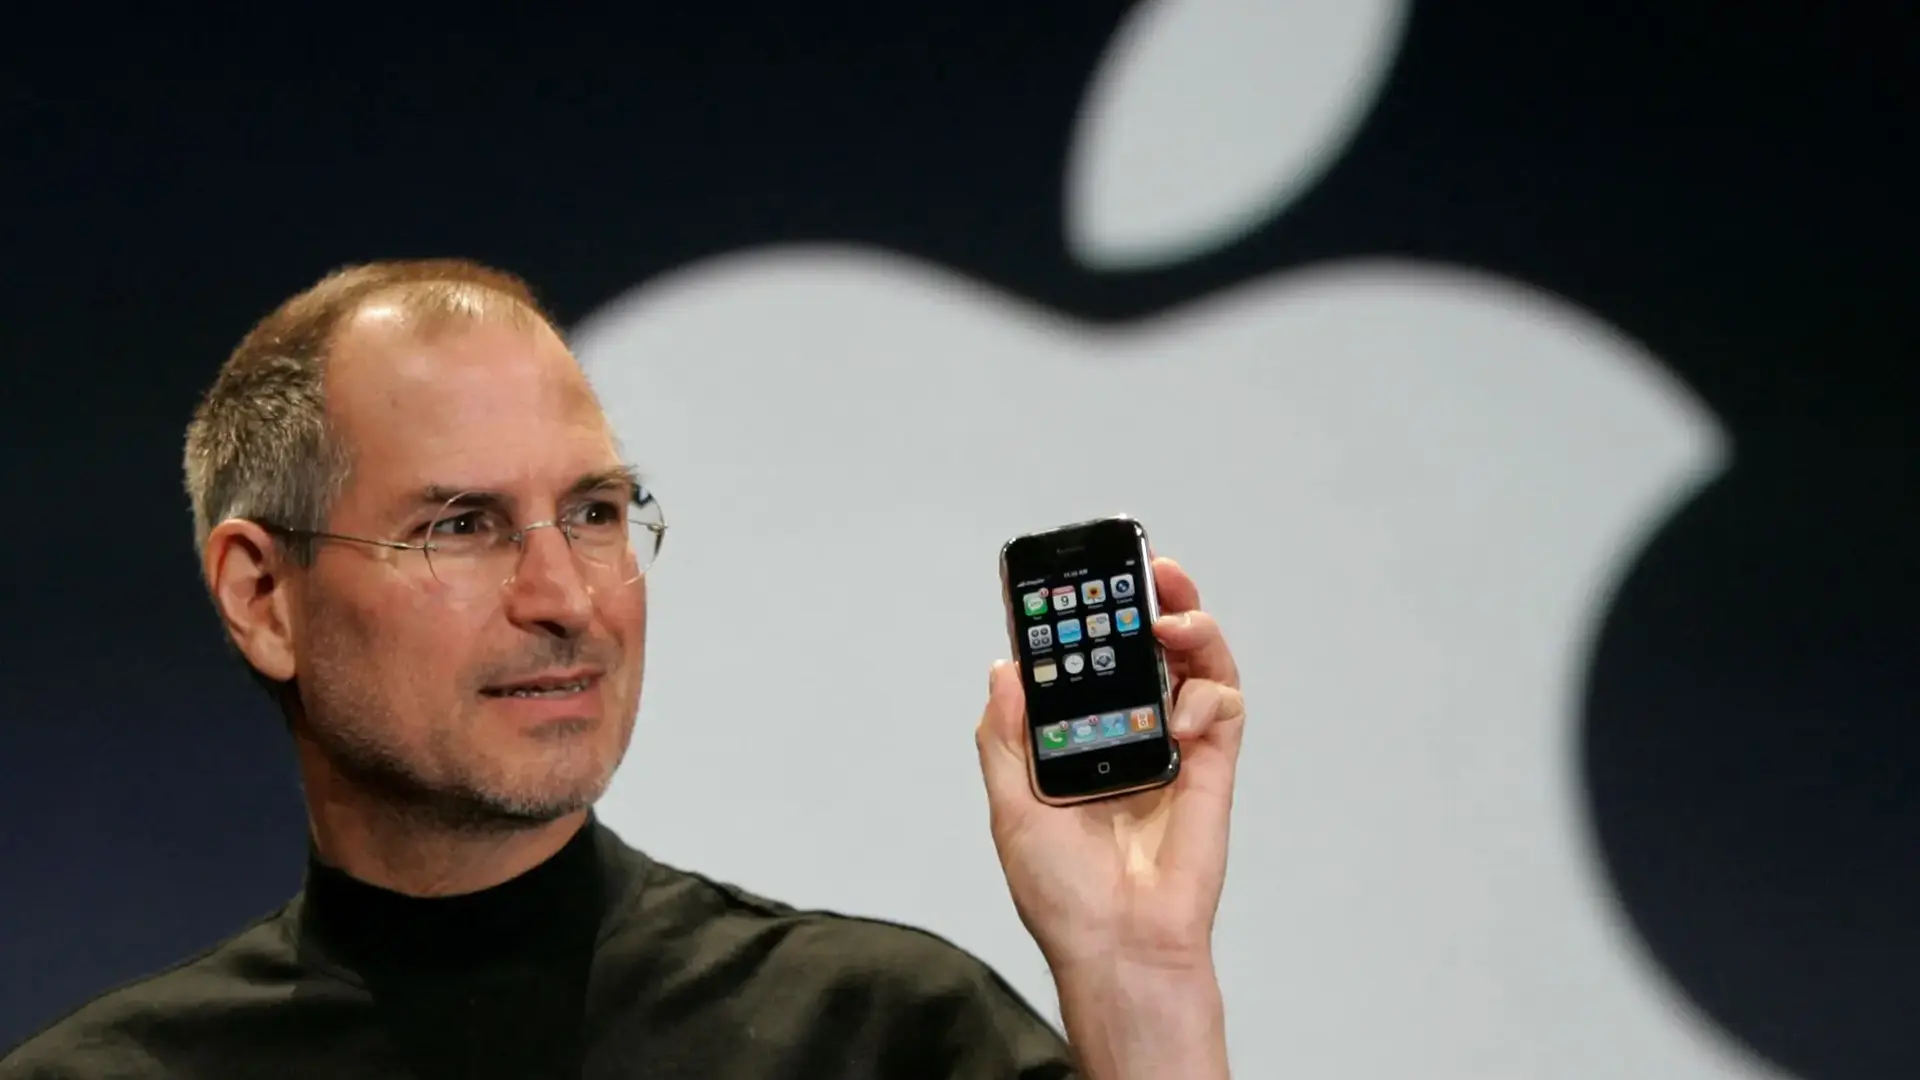 Steve Jobs introducing iPhone